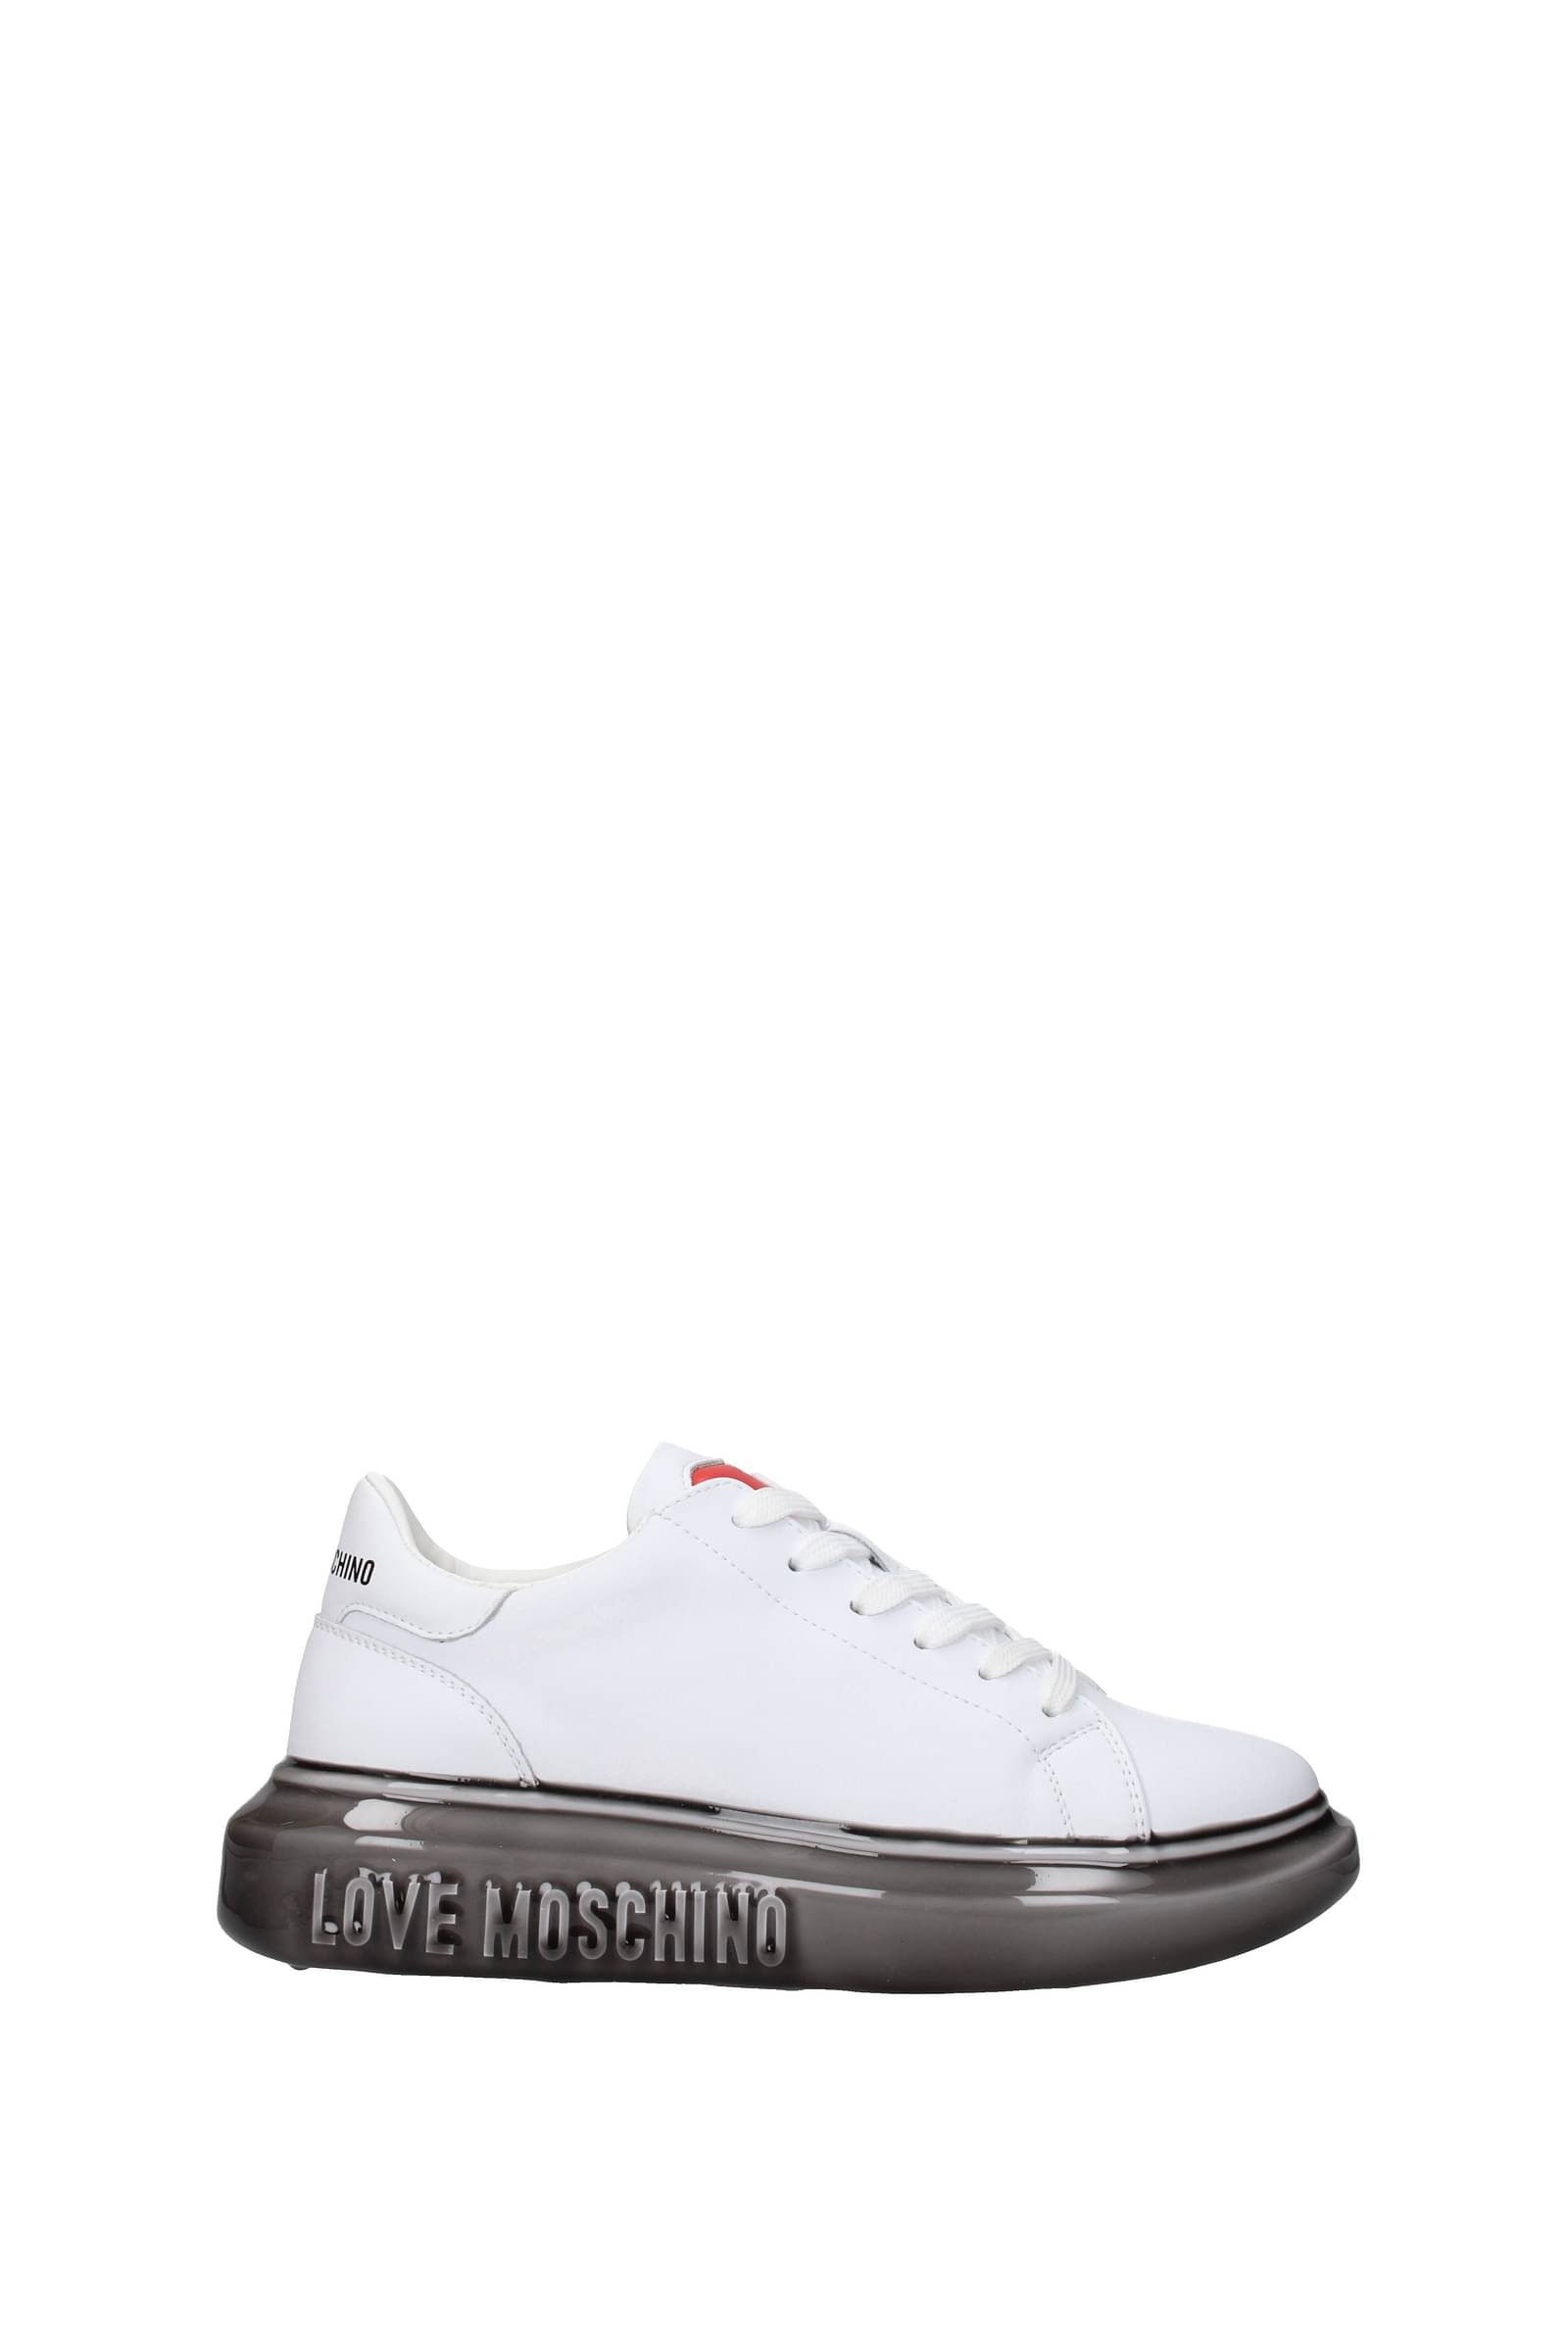 LACOSTE Carnaby Pro BL Tonal Leather Sneakers Women's Size 9 White | eBay